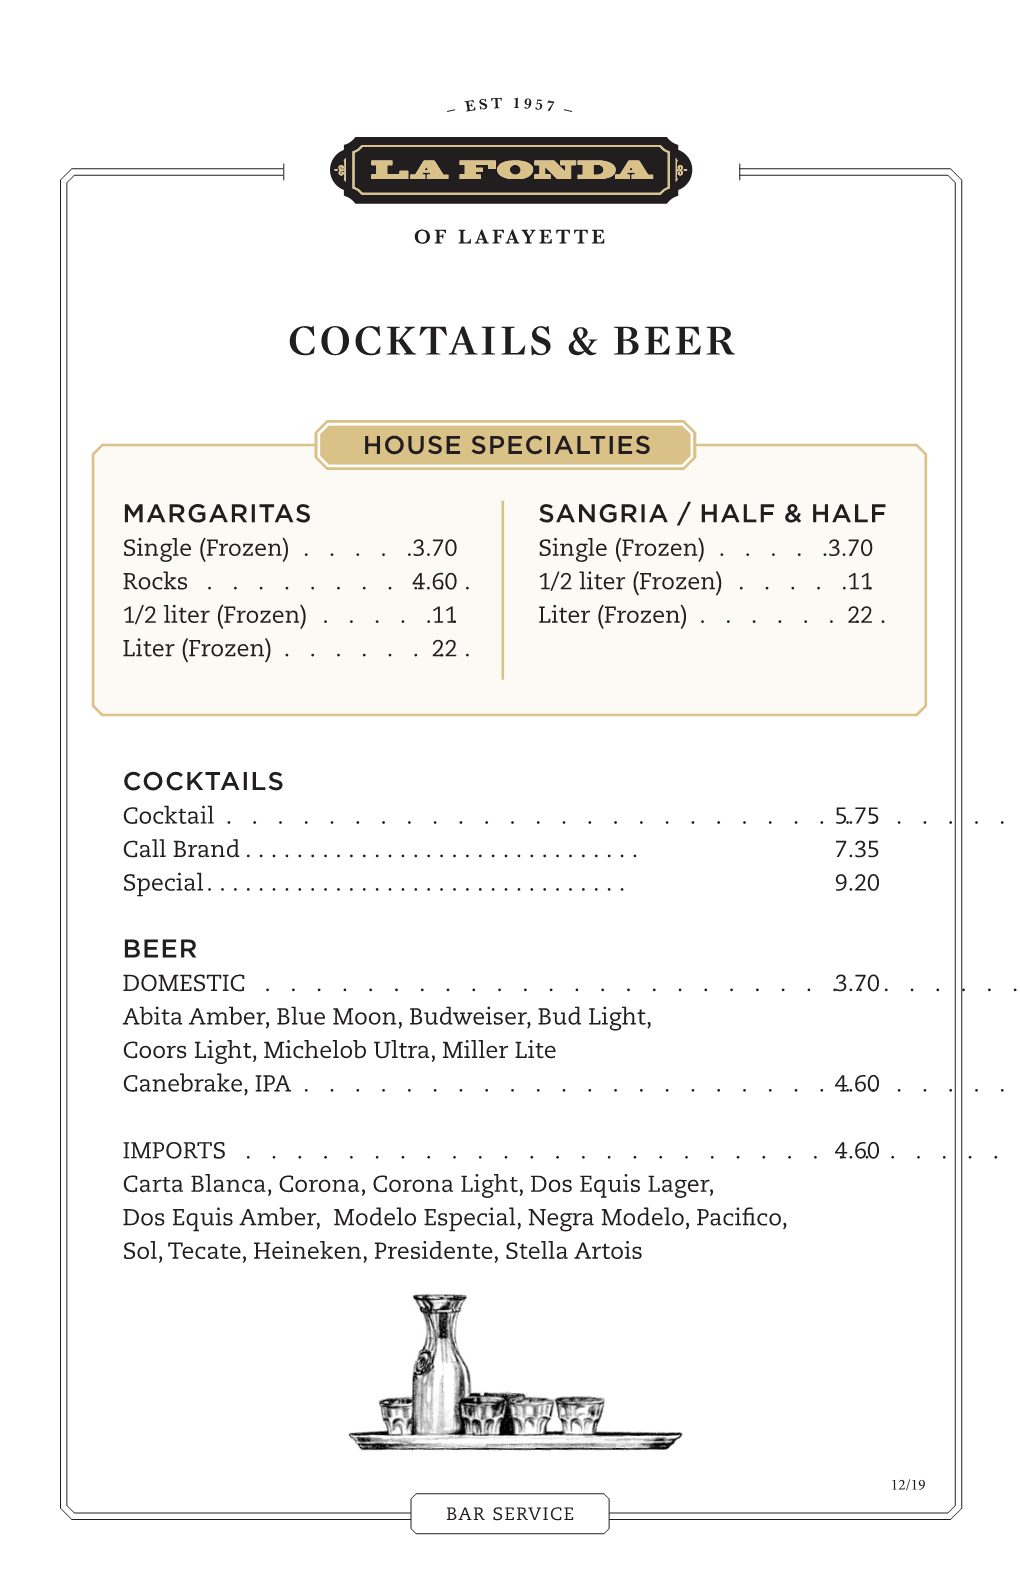 Cocktails & Beer